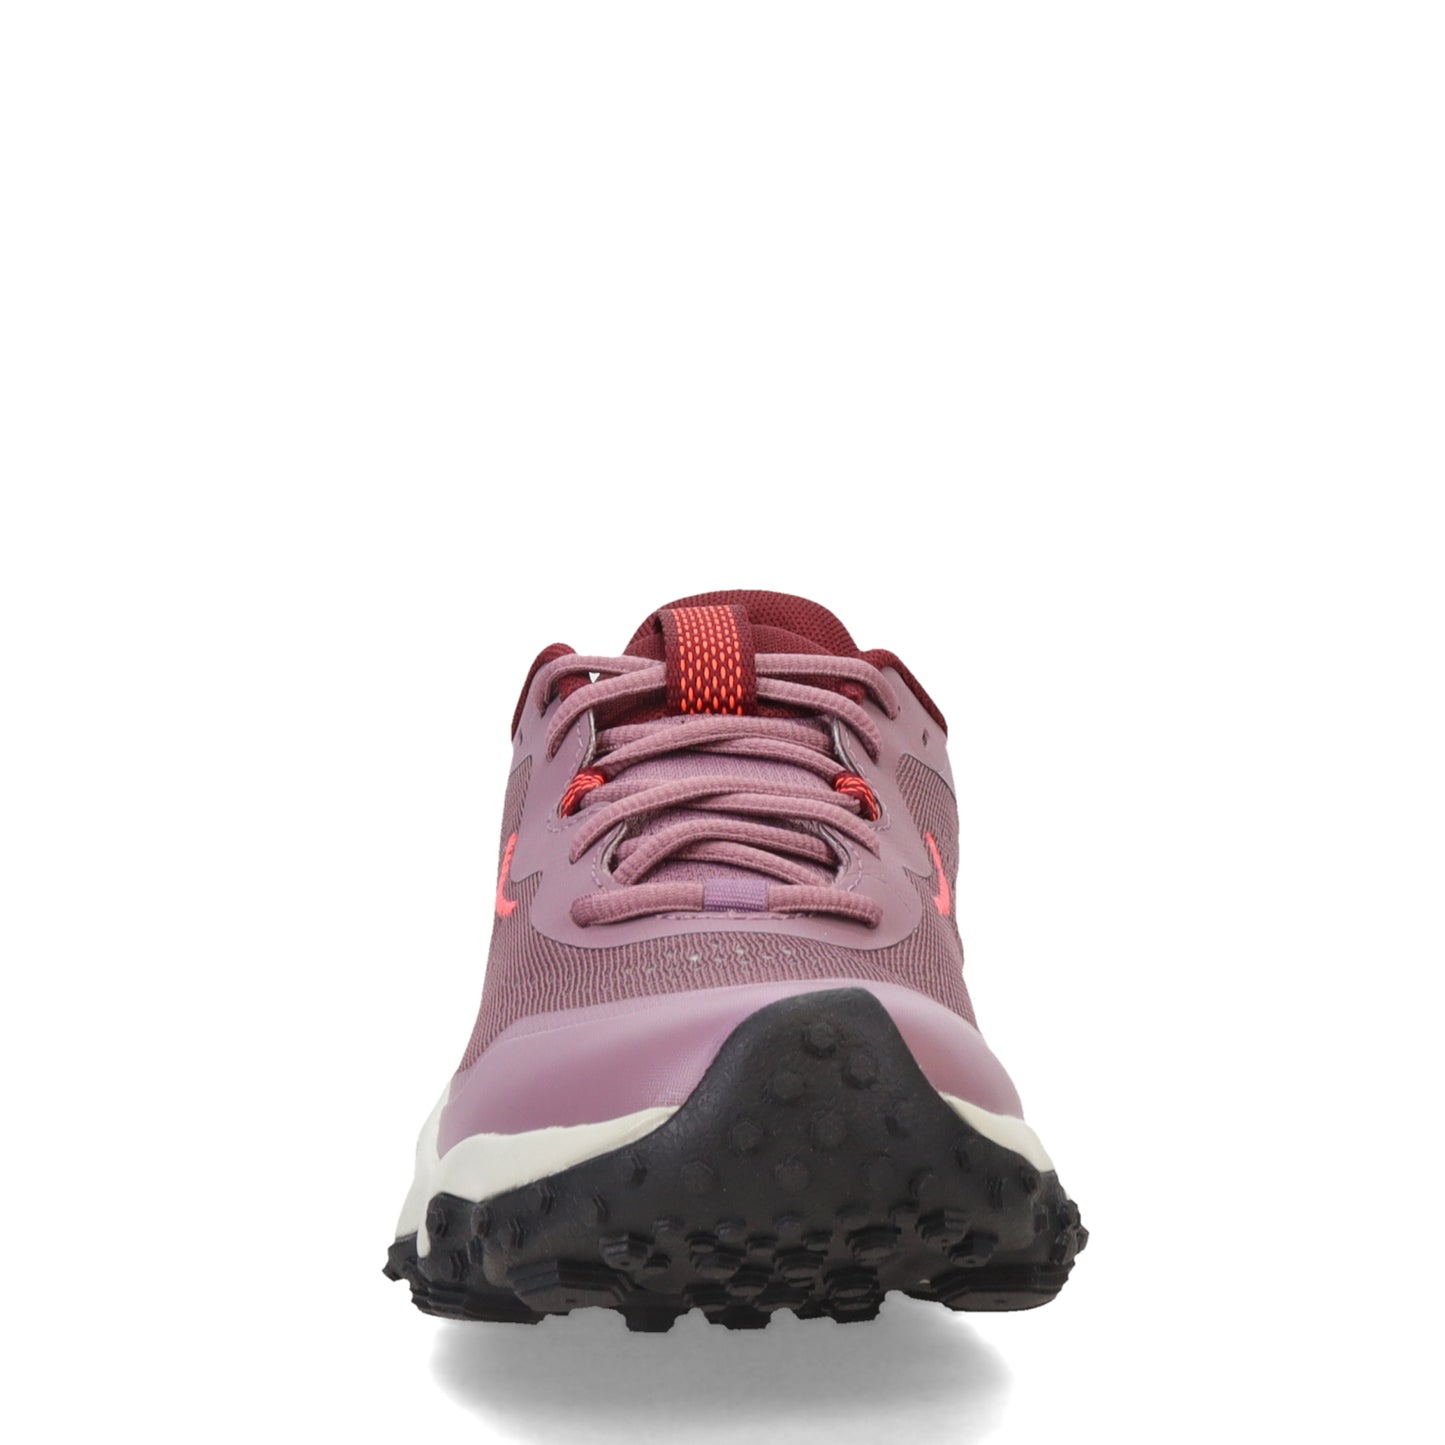 Peltz Shoes  Women's Under Armour Charged Maven Trail Running Shoe Misty Purple/White 3026143-501